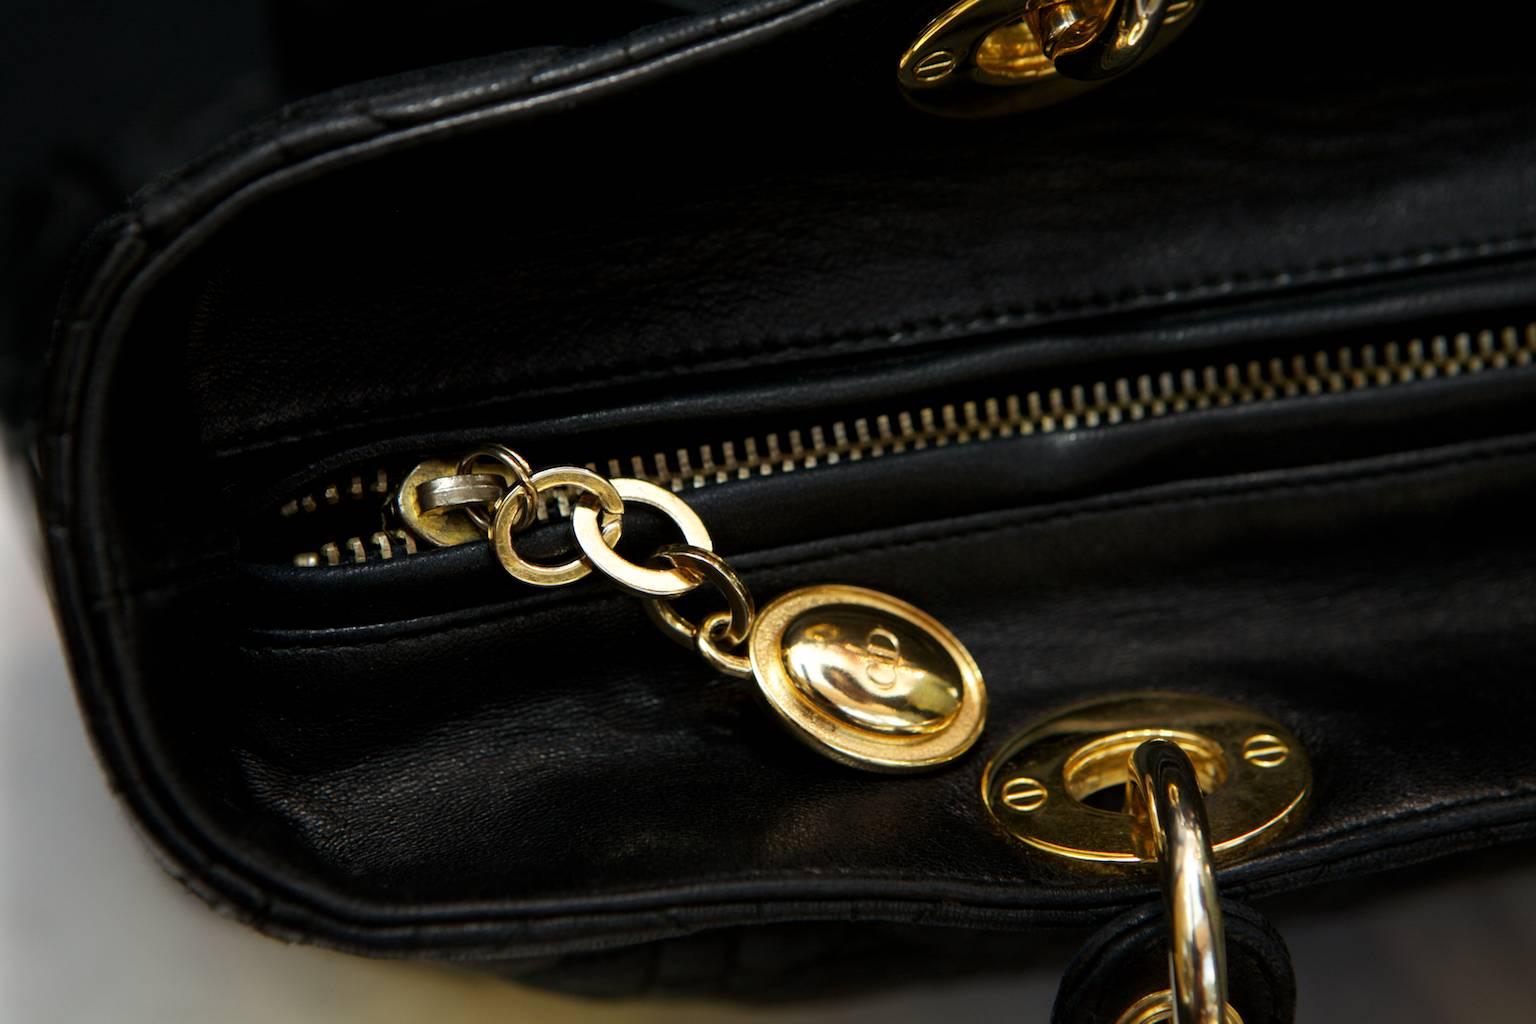 2012 Christian Dior Iconic Large 'Lady Dior' Handbag in Black Lambskin and Gilt 3